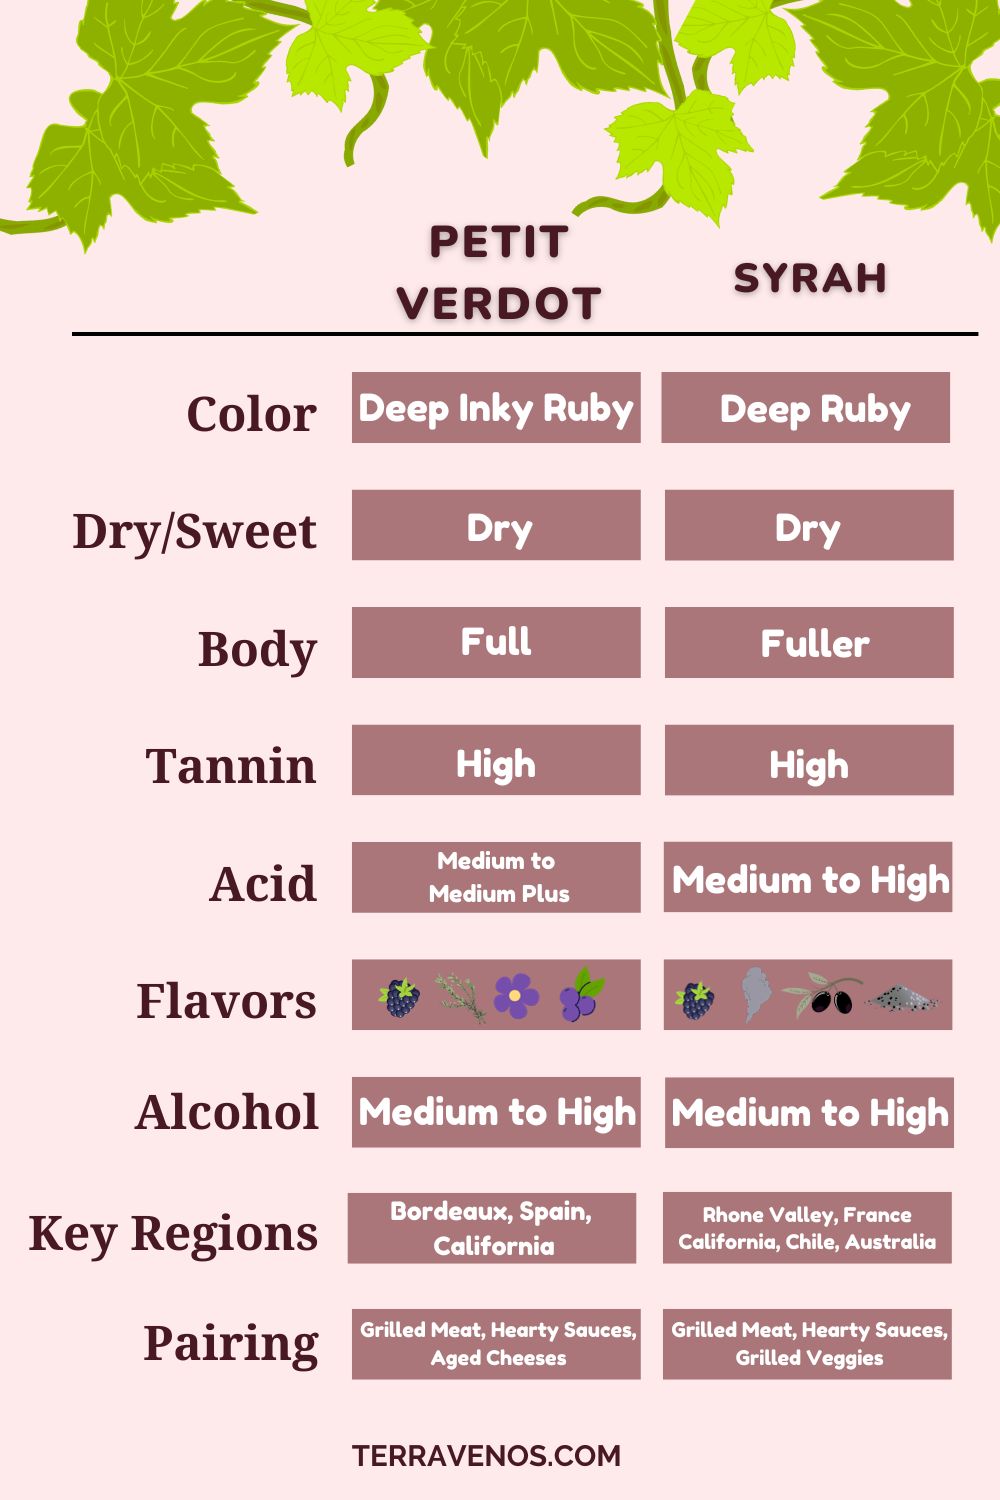 petit verdot vs syrah wine comparison infographic